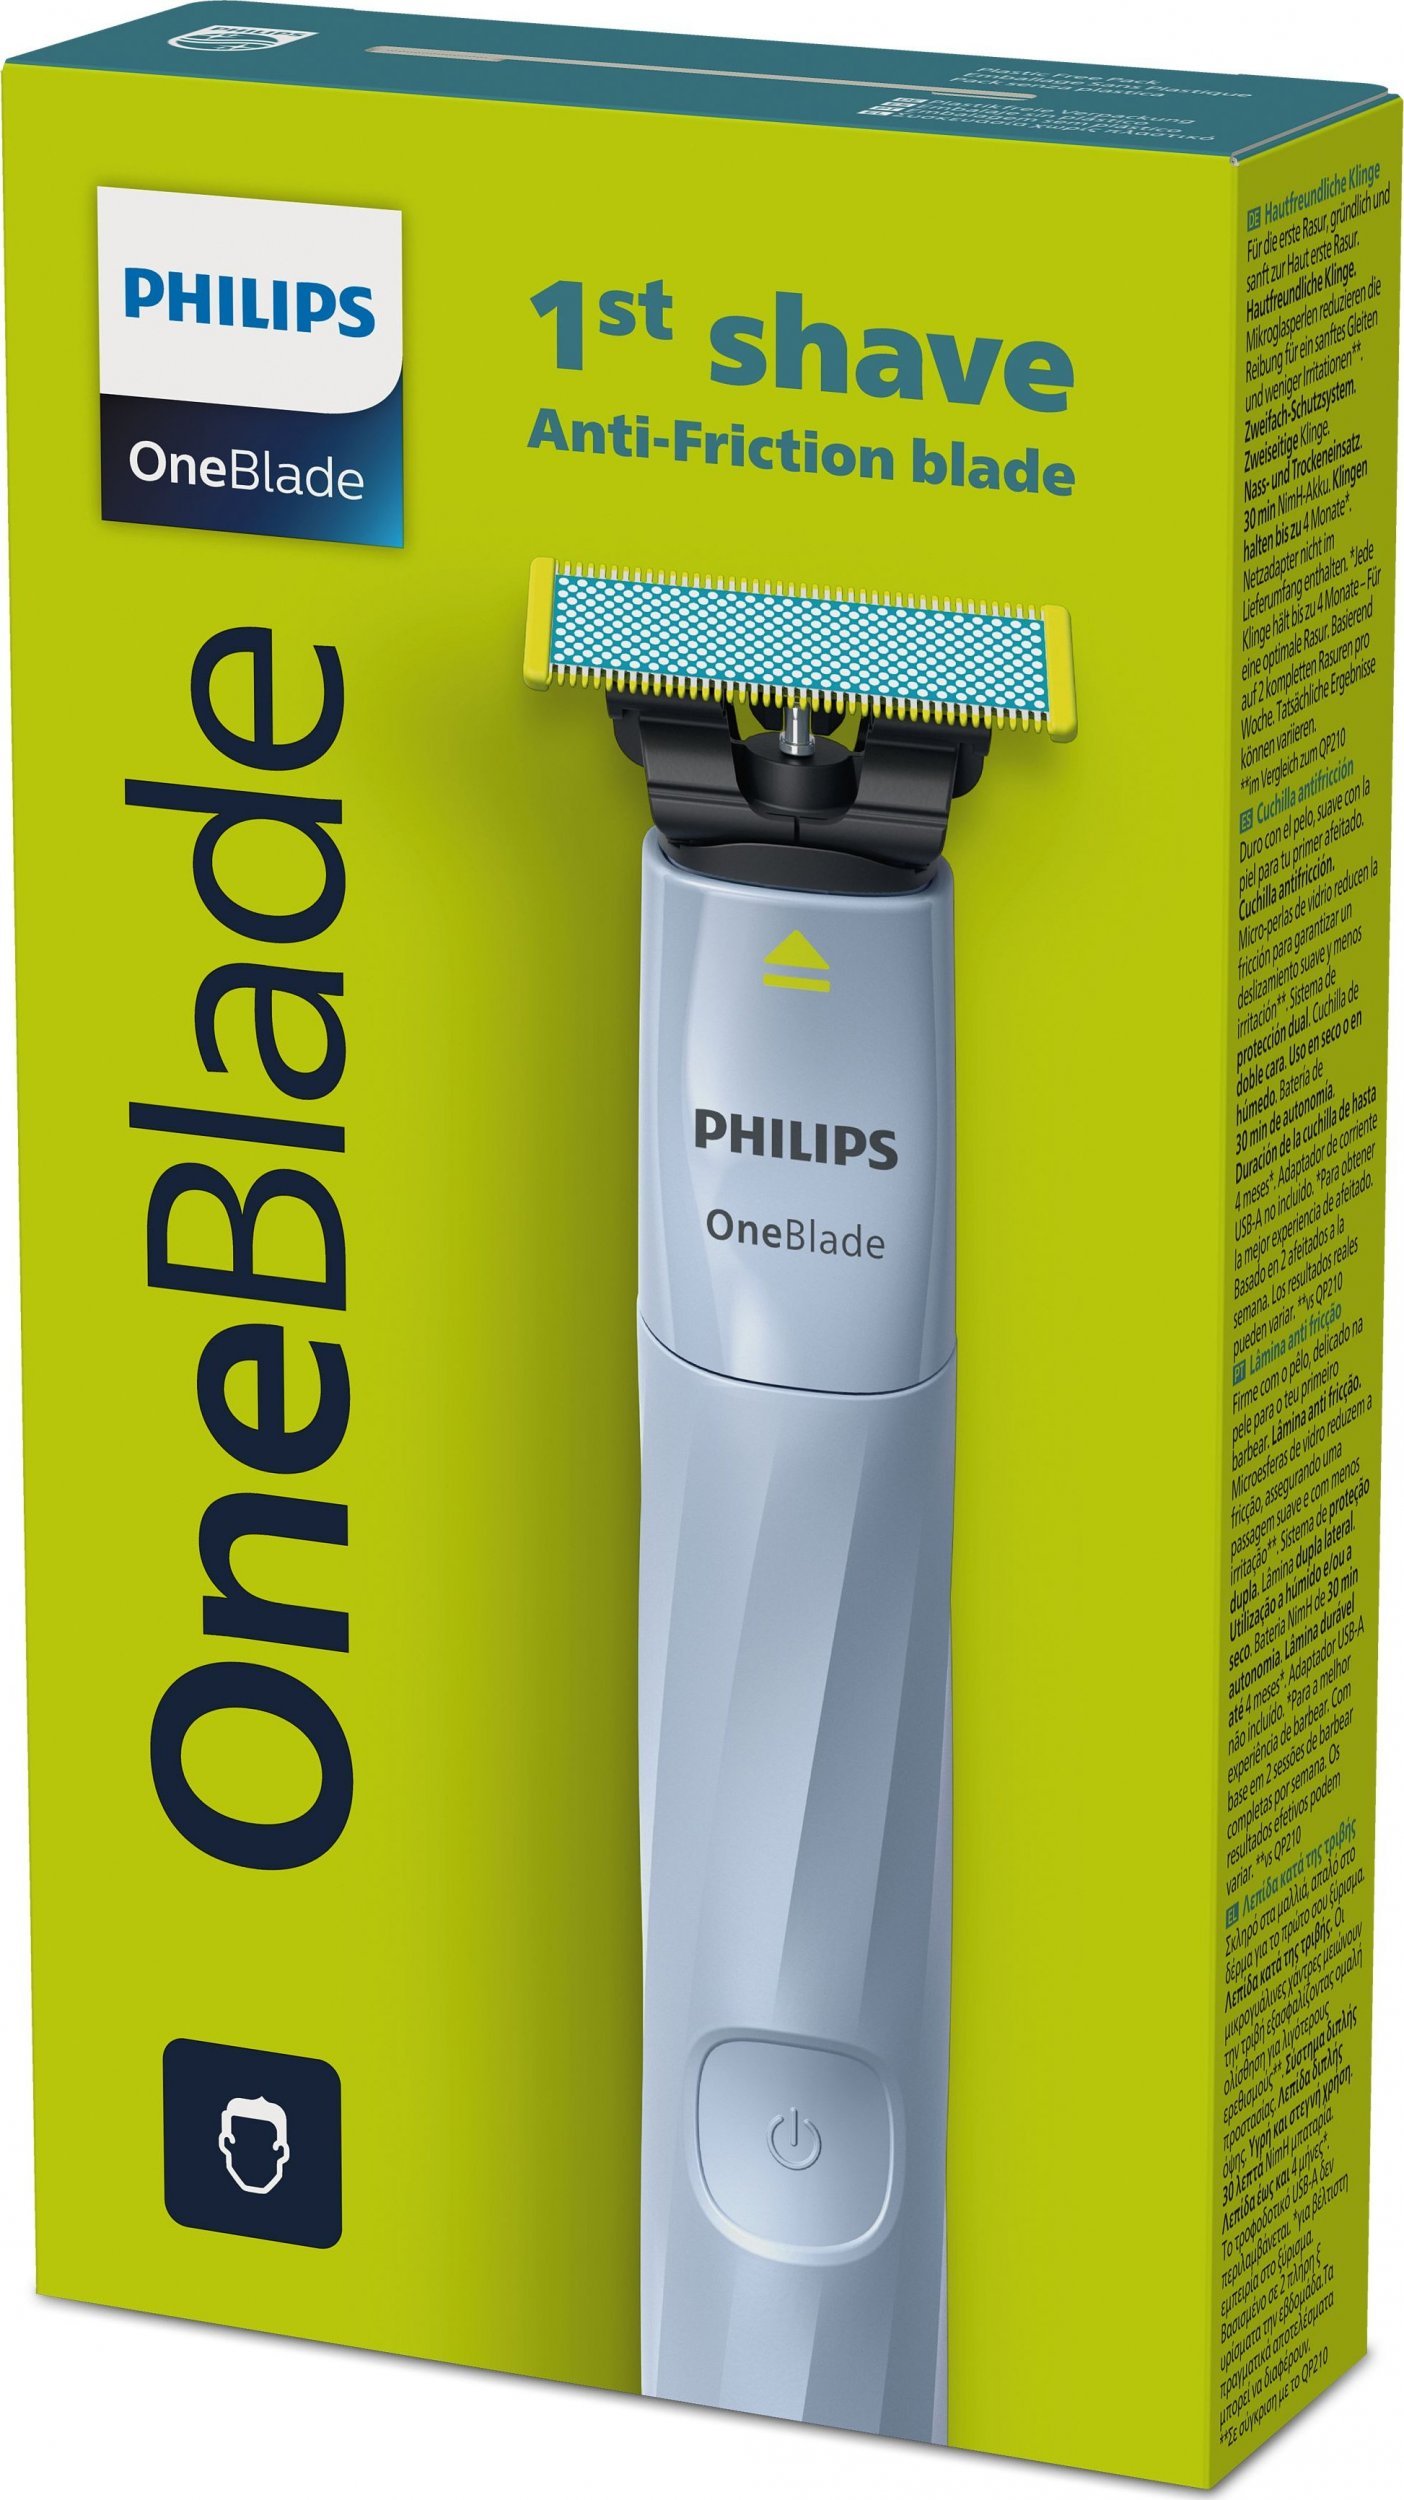 Aparate de ras electrice - Aparat de ras Philips  OneBlade First Shave Qp1324/20,
Hibrid,
Uscat si umed,
Reîncărcabil,Durata de viata a bateriei
30 minute,
Albastru